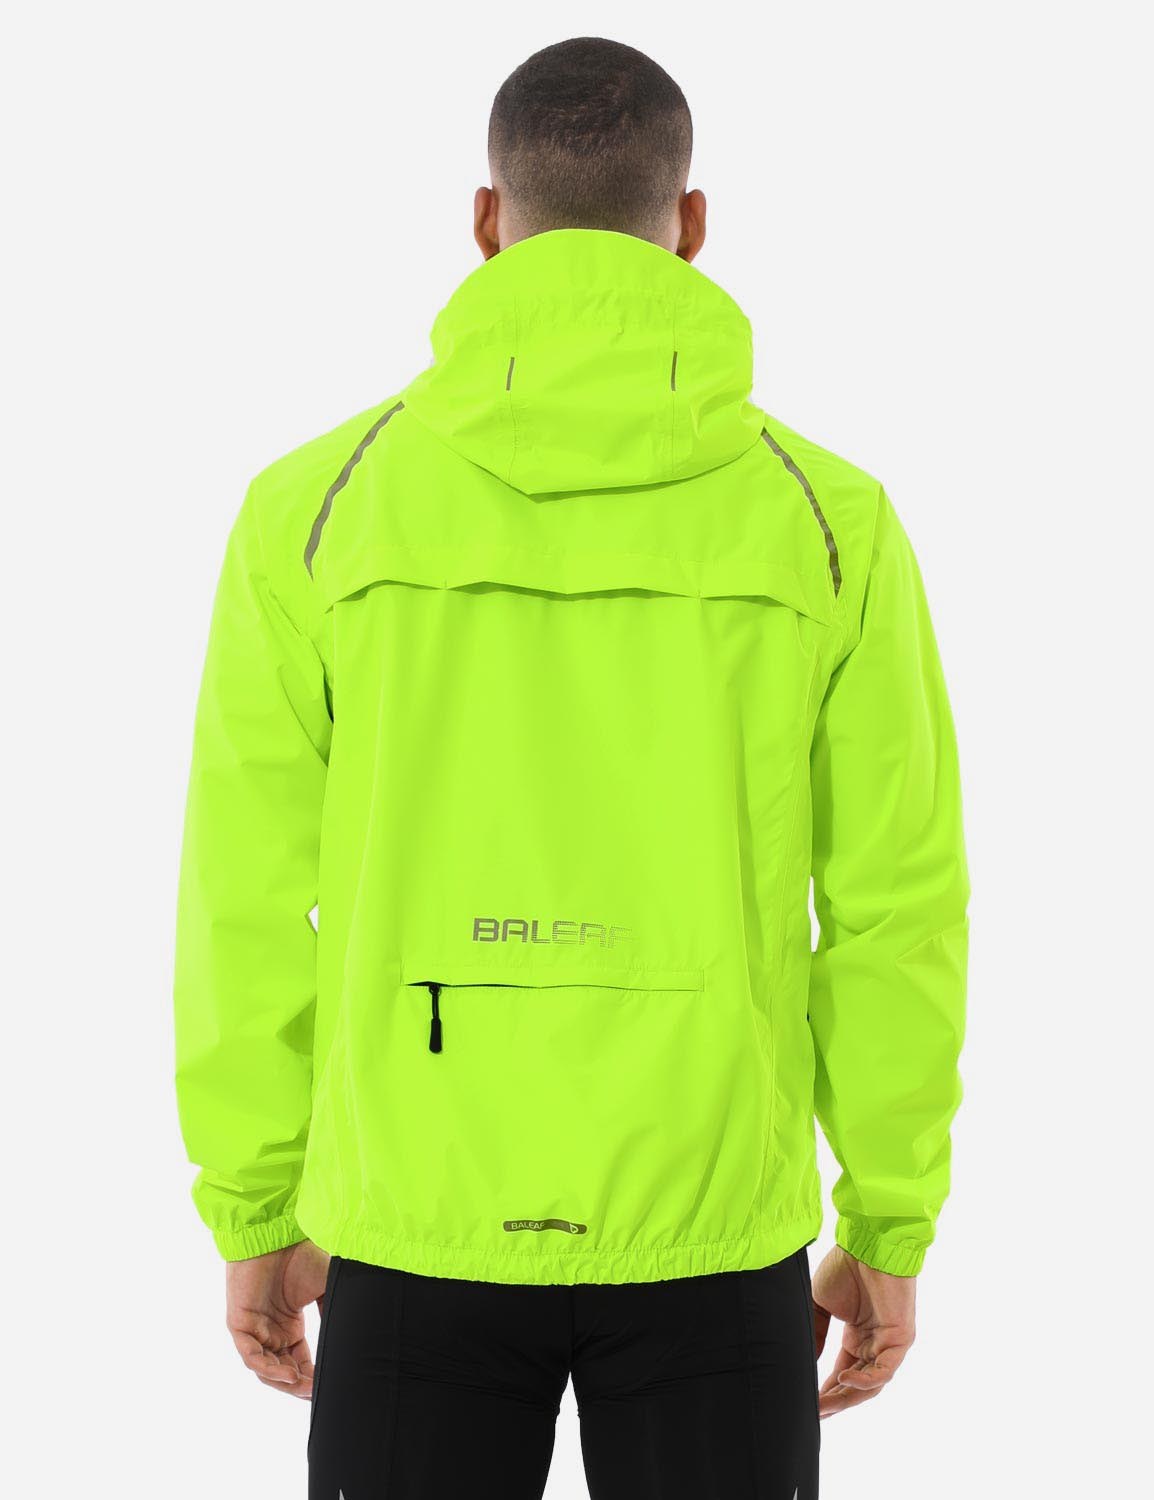 Baleaf Men's Fluorescent Waterproof Packable Windbreaker Track Jacket aaa467 Fluorescent Yellow Back